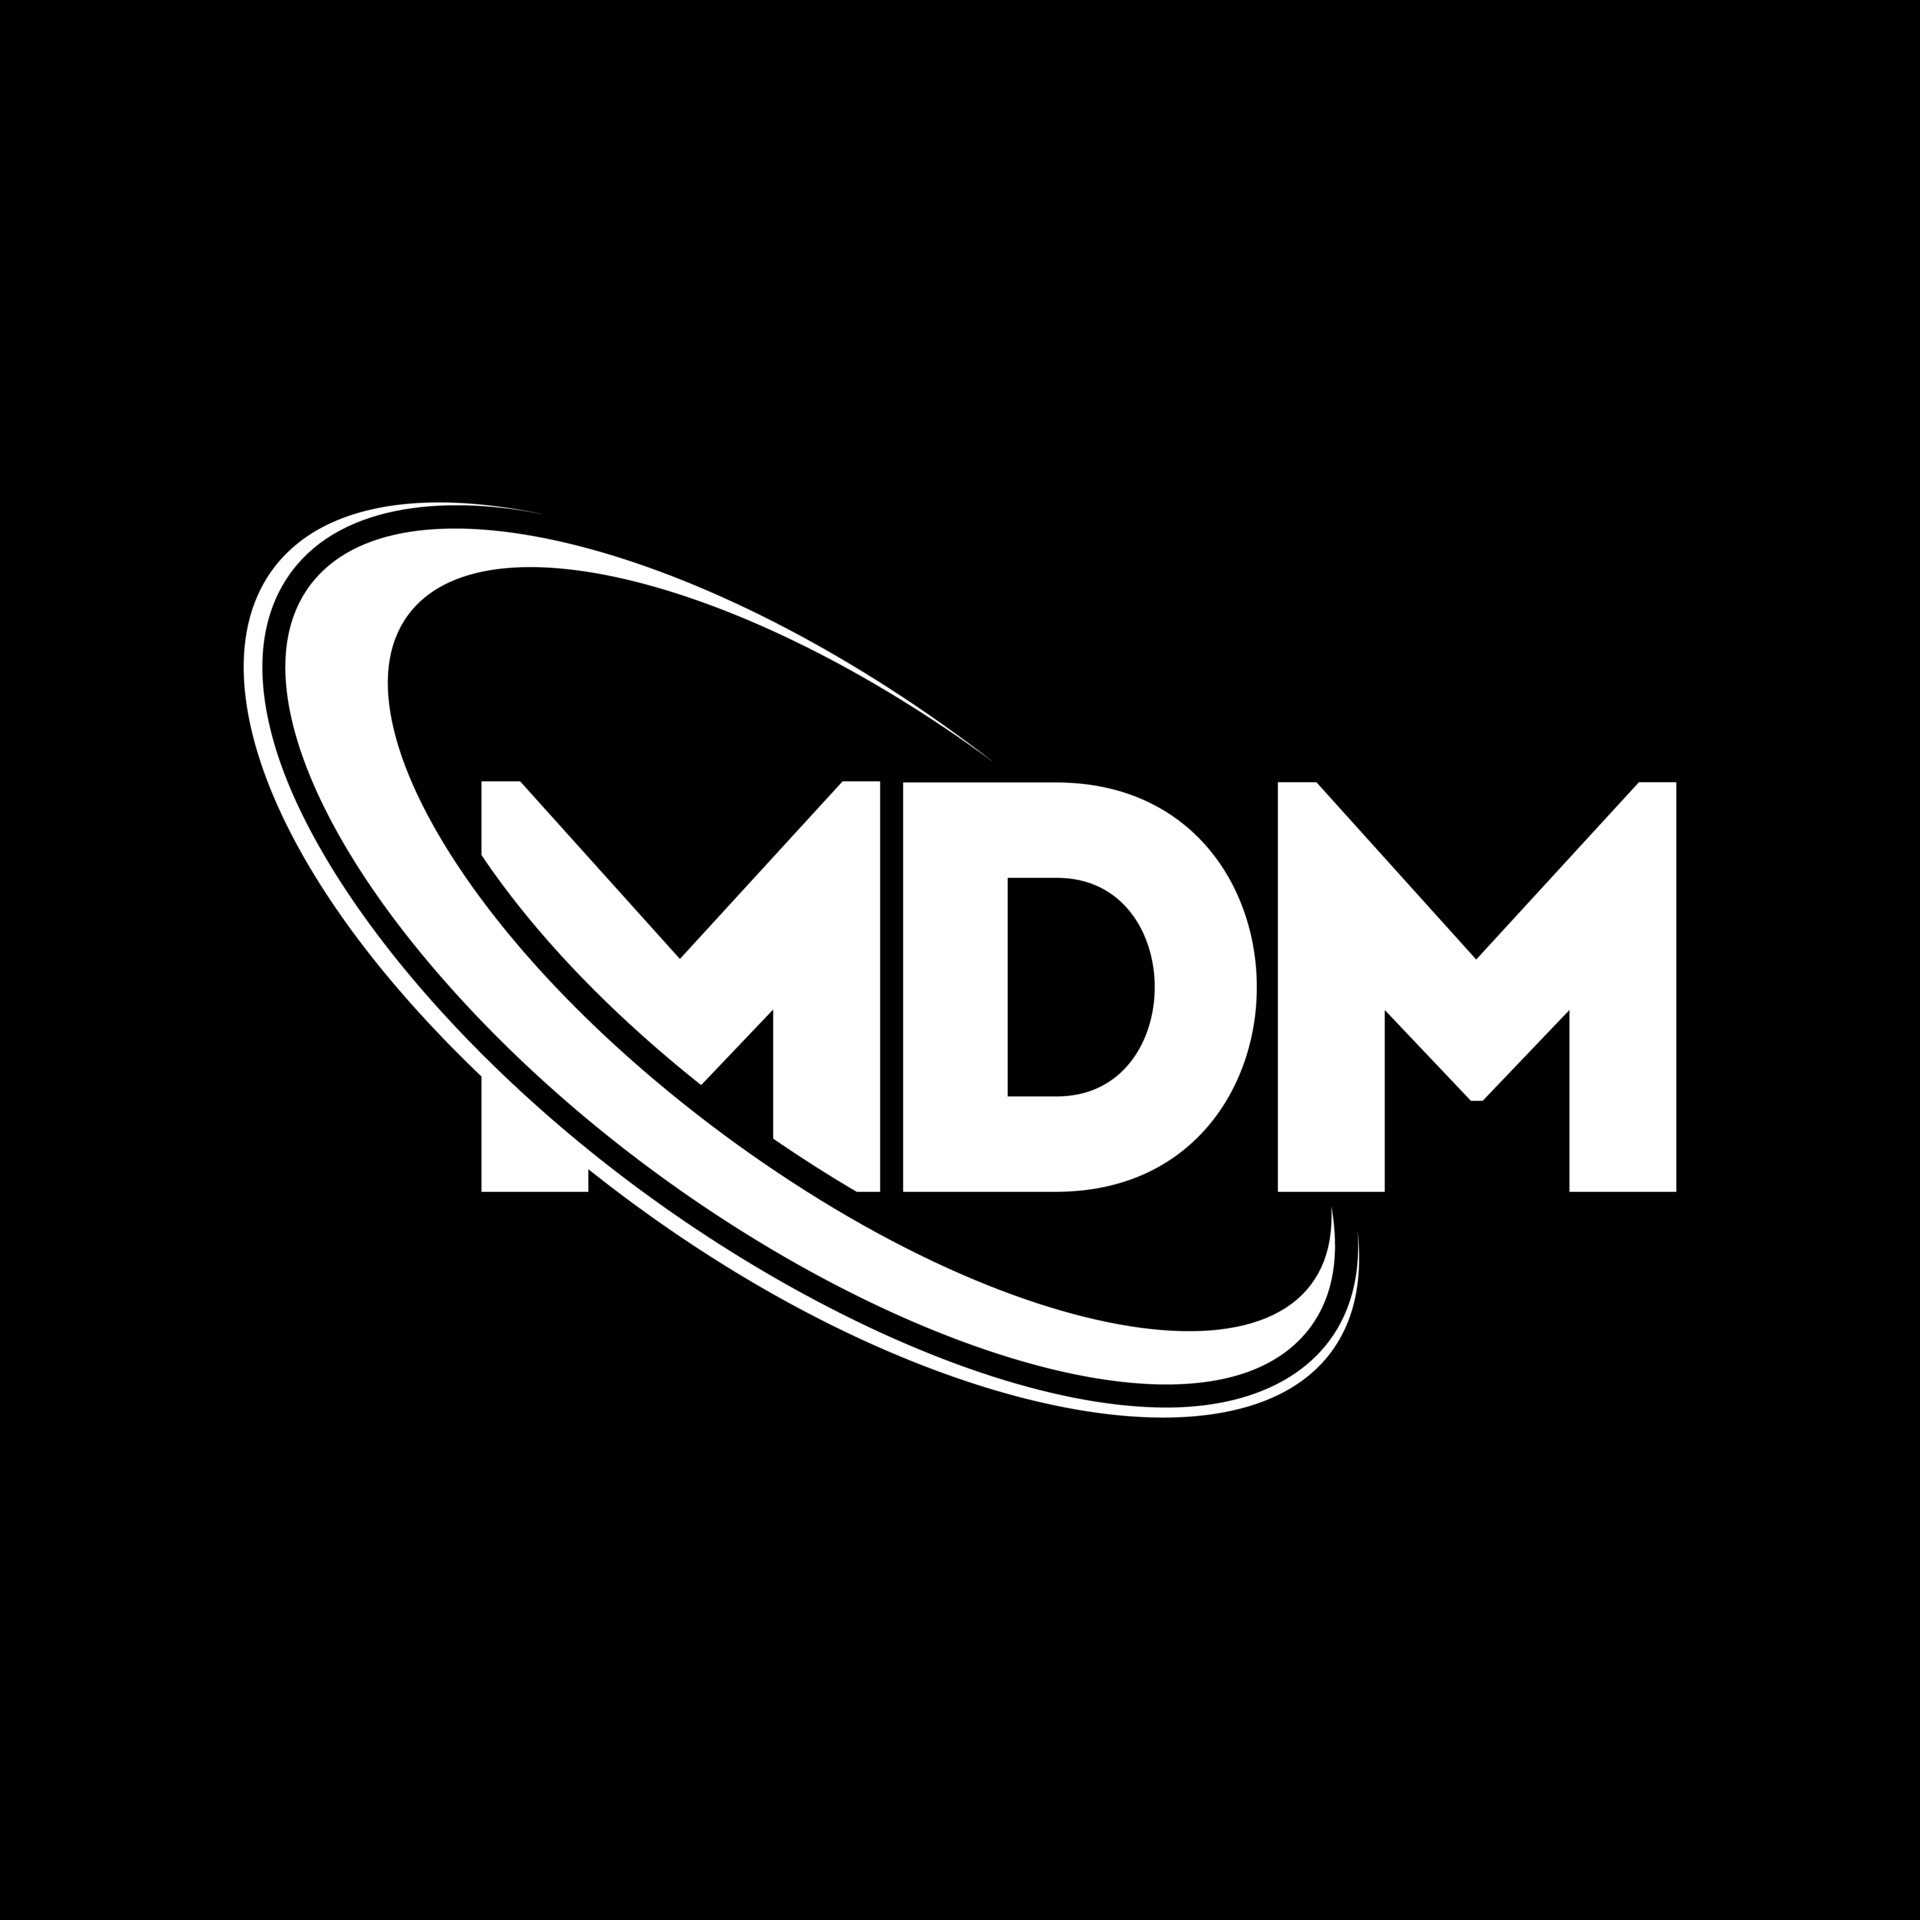 MDM logo. MDM letter. MDM letter logo design. Initials MDM logo linked ...